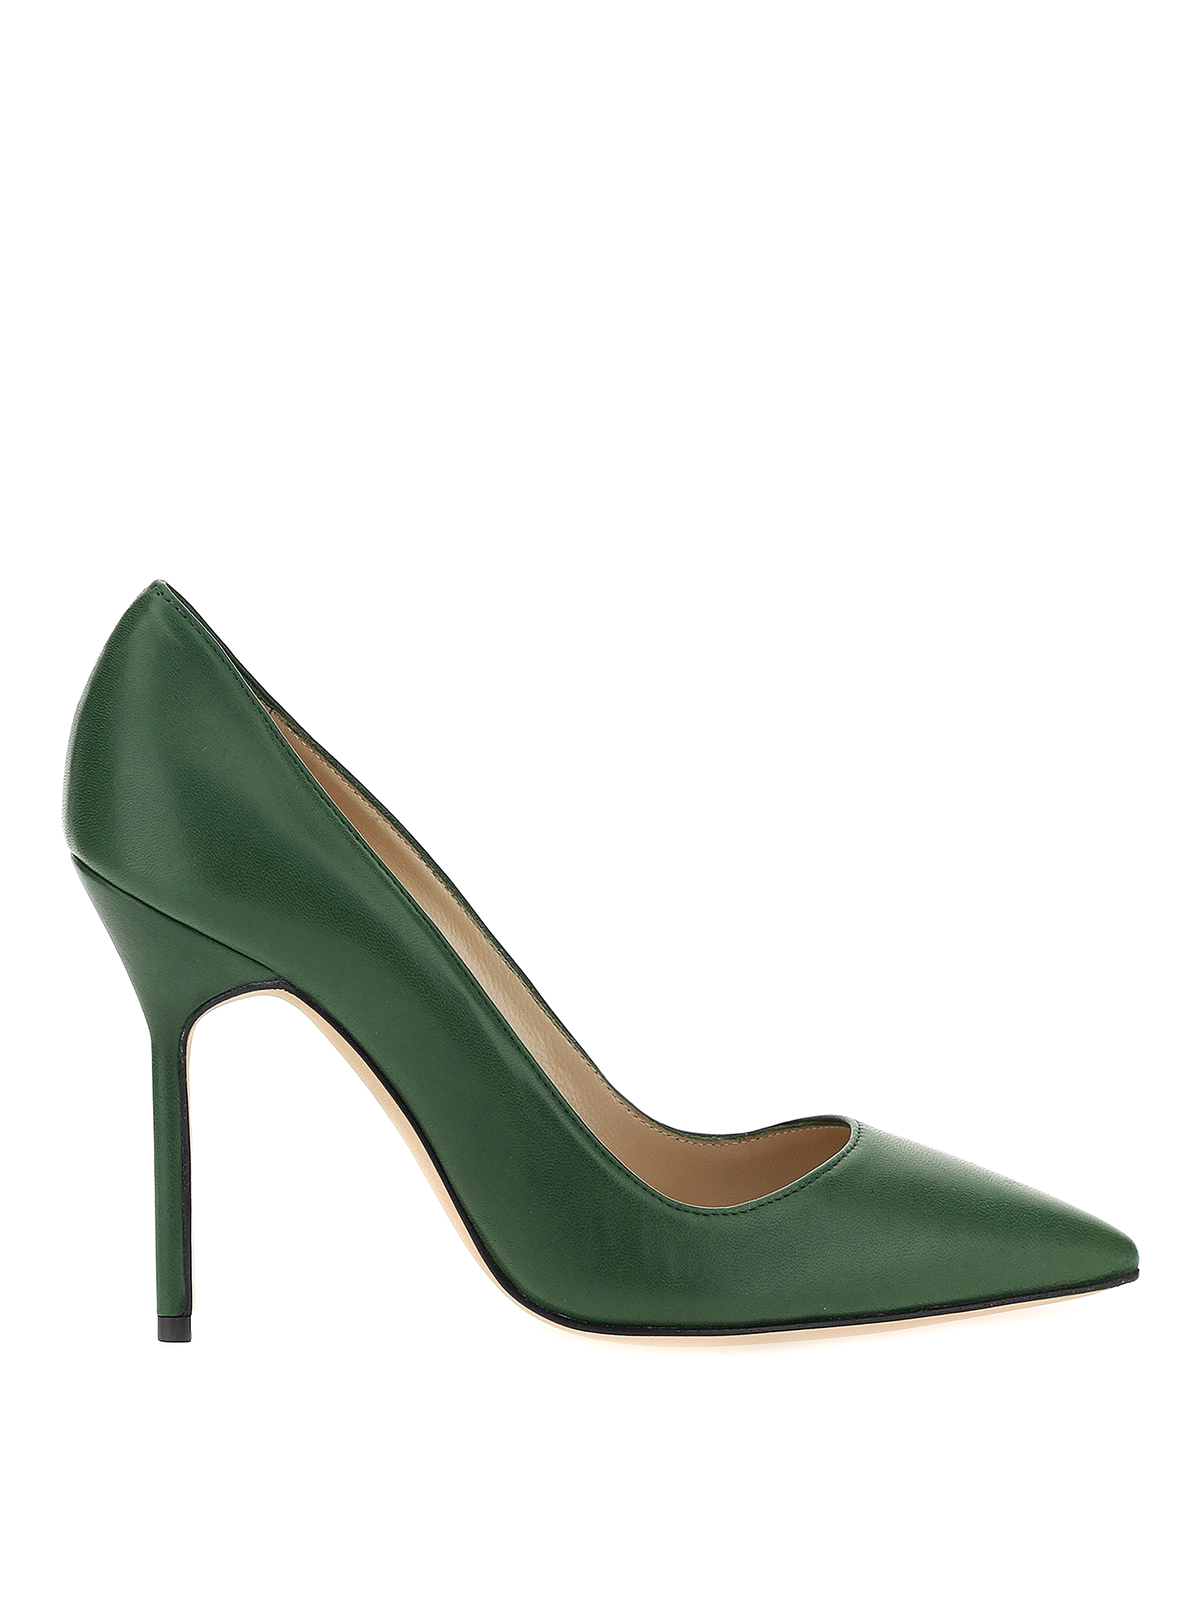 Court shoes Manolo Blahnik - BB green leather pumps - 9XX04653037